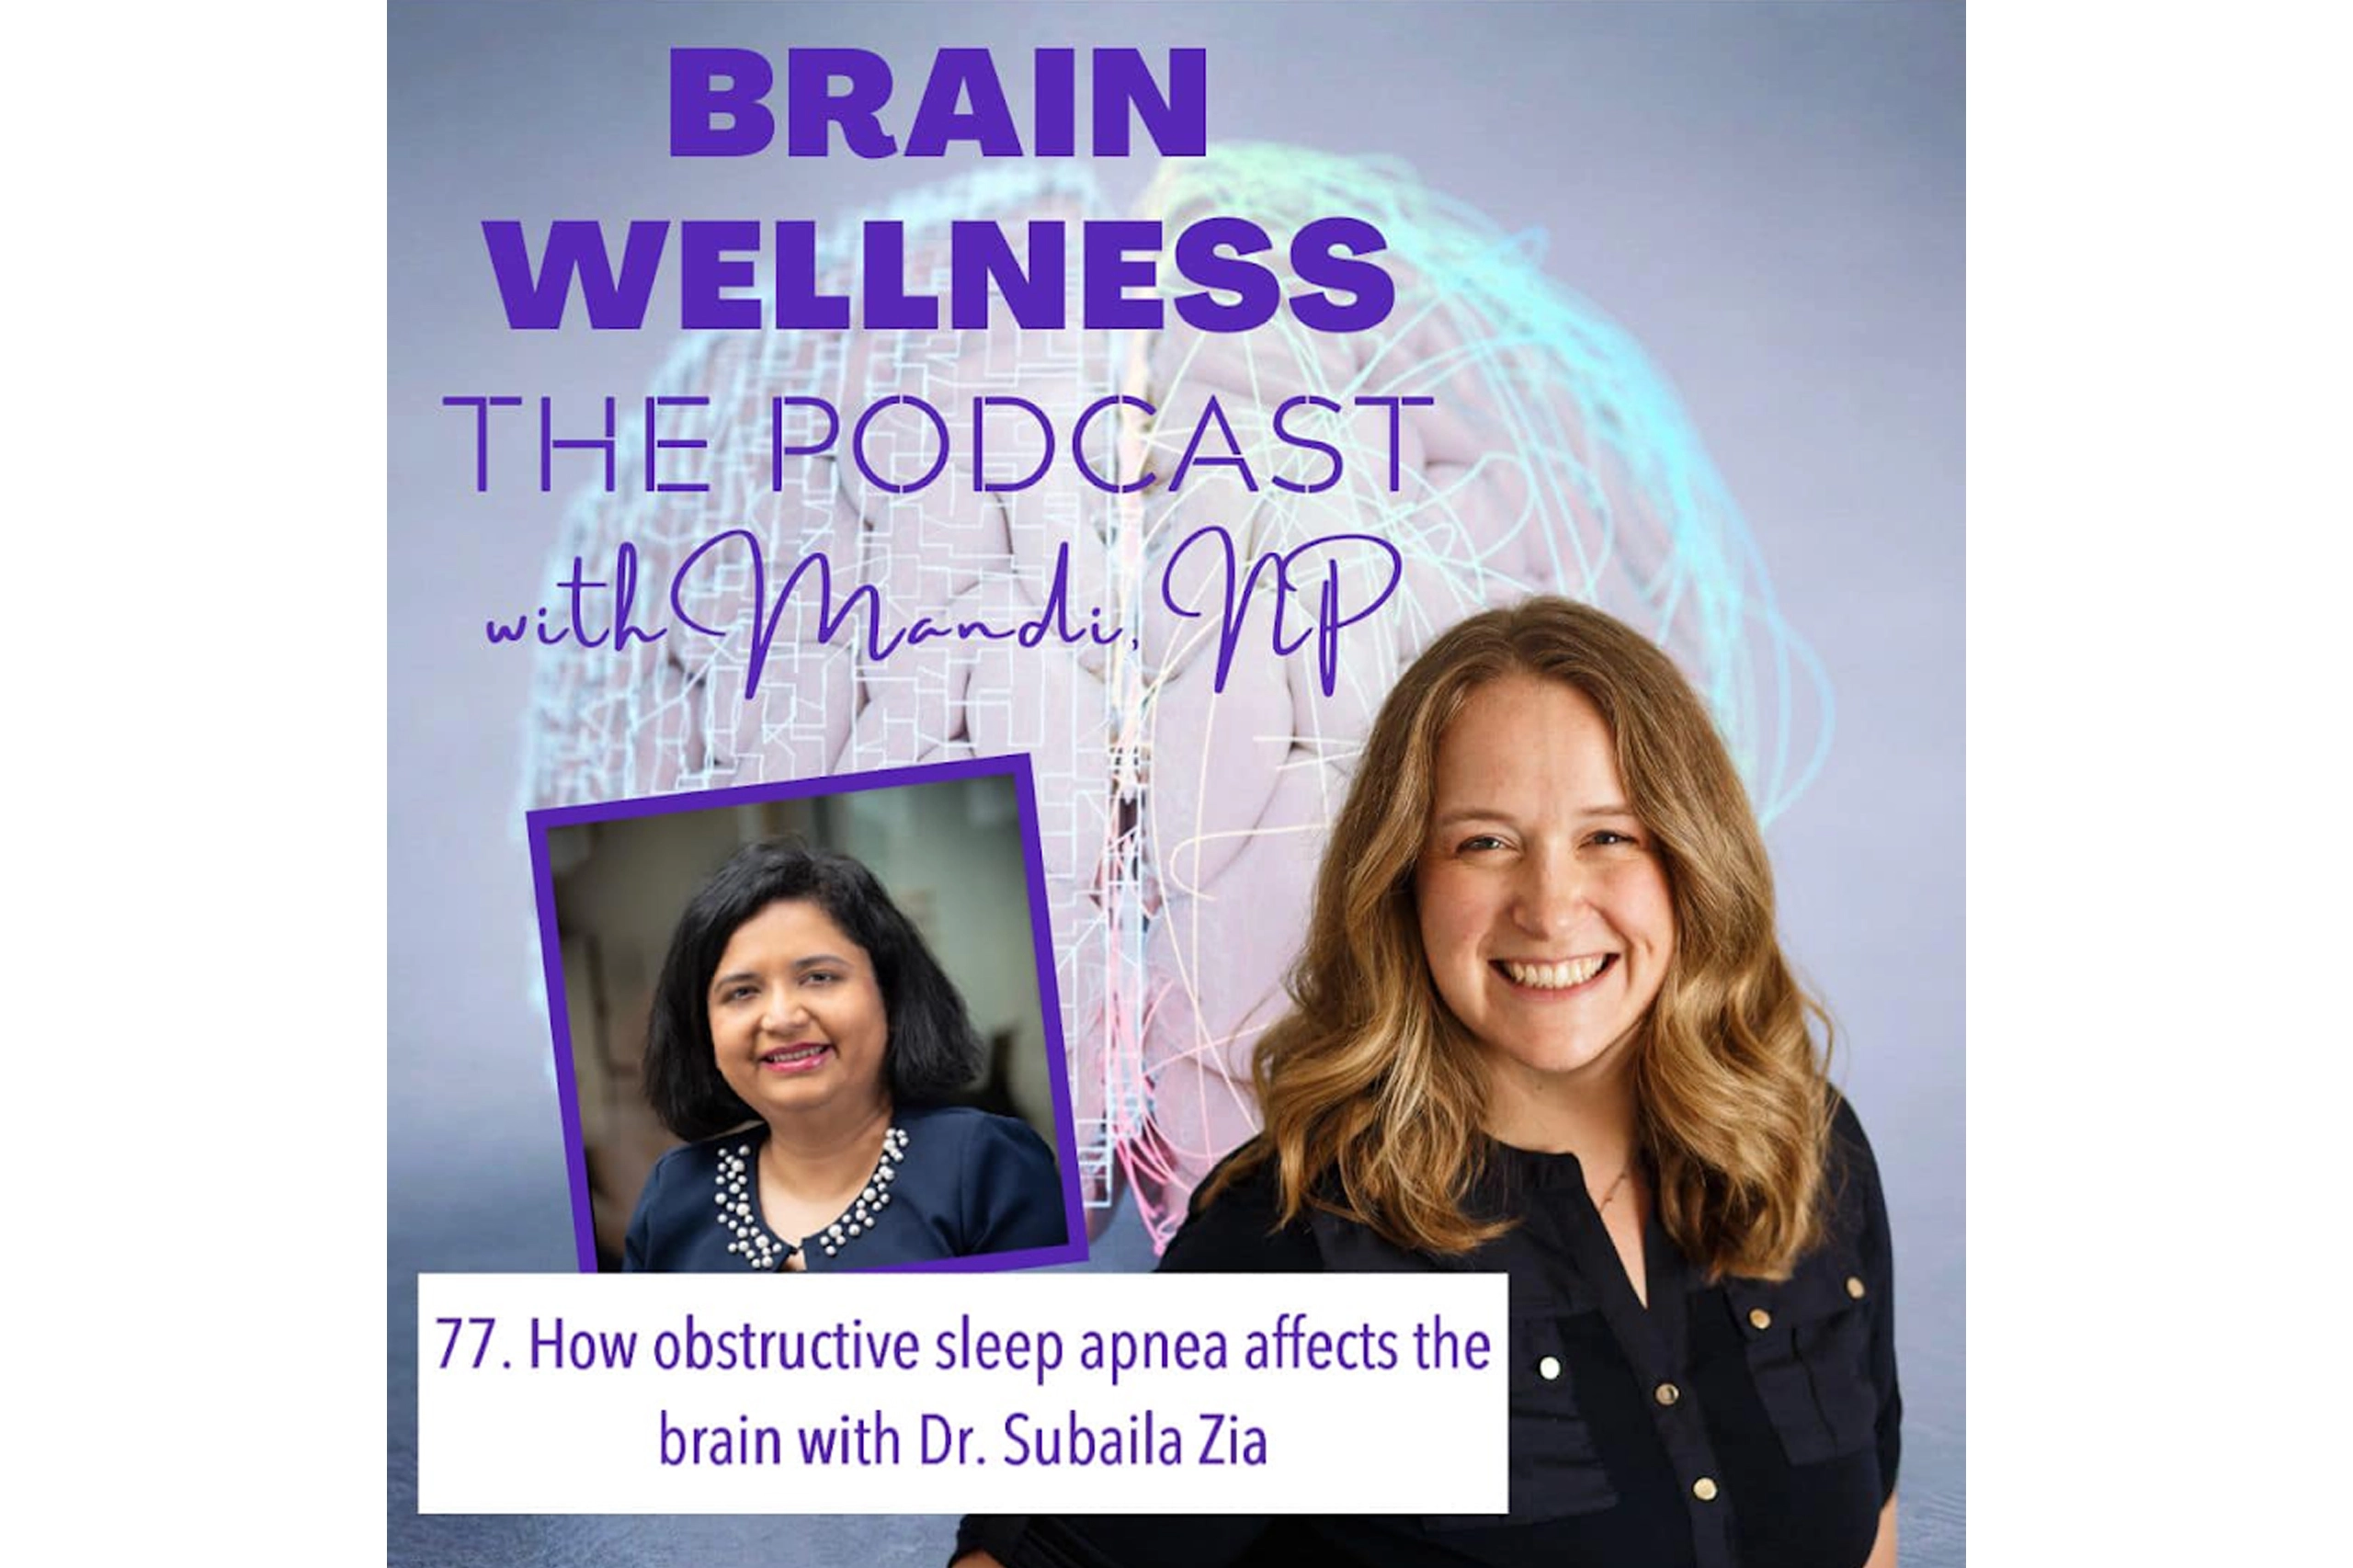 Brain wellness 5